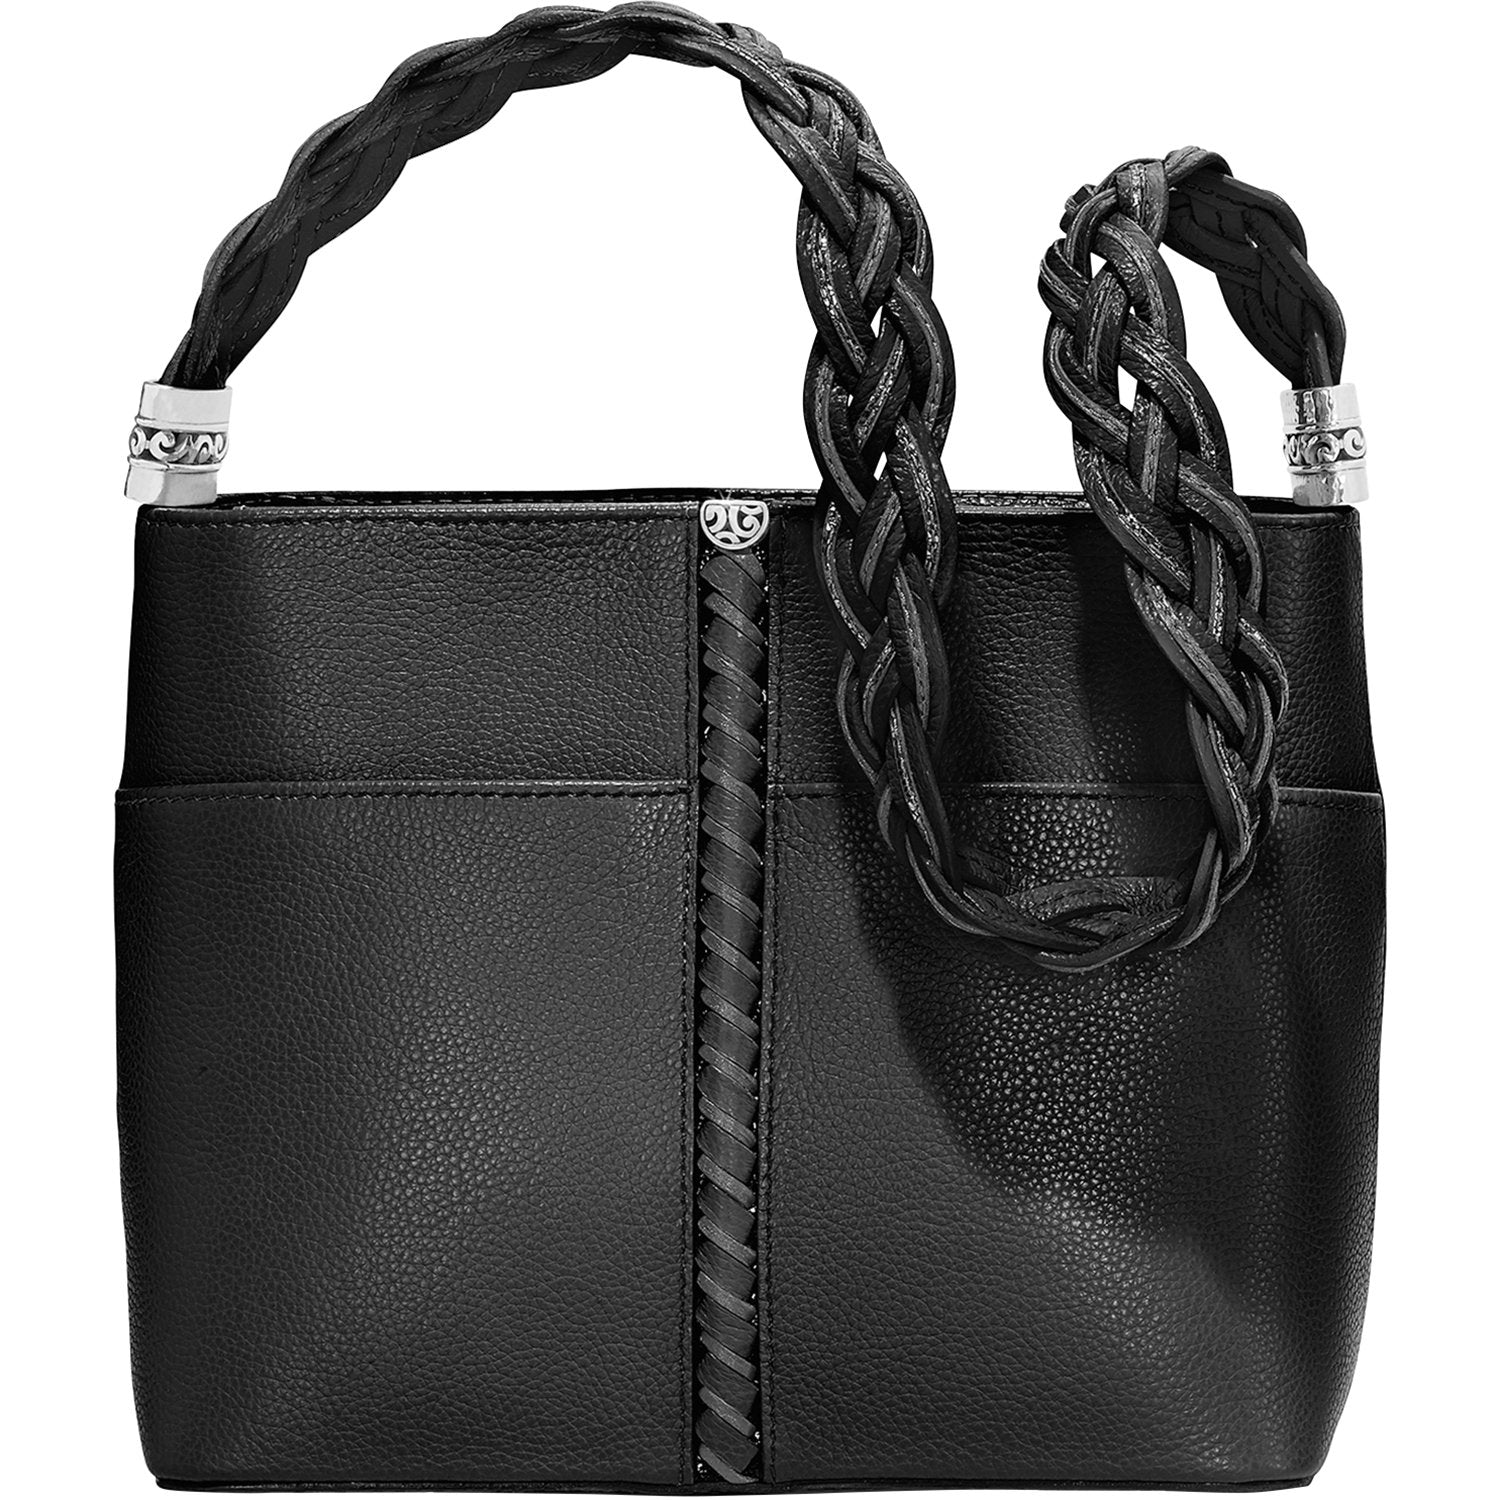 Brighton Brown Bags & Handbags for Women for sale | eBay